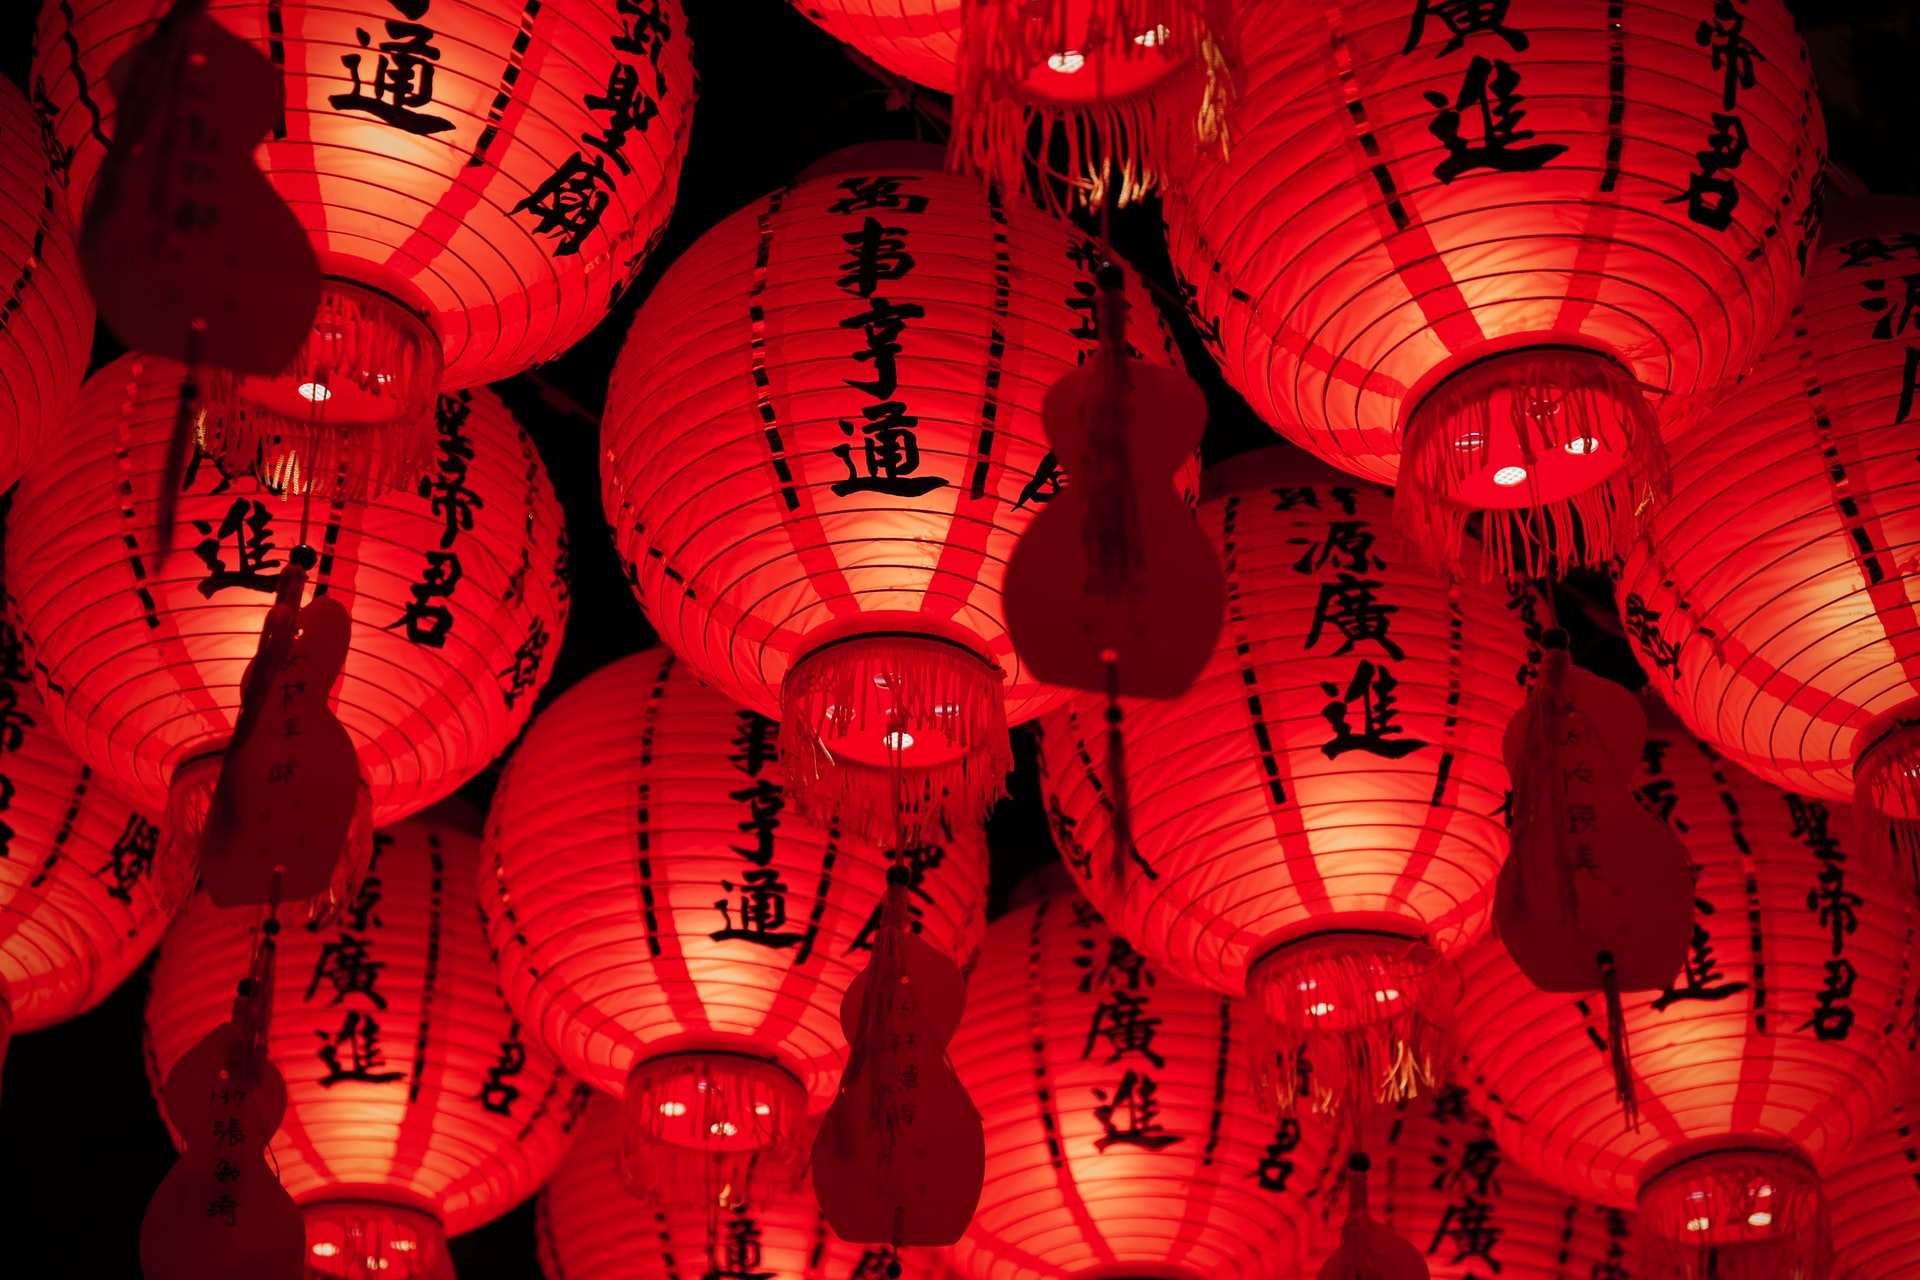 red lanterns celebrate the Lunar New Year